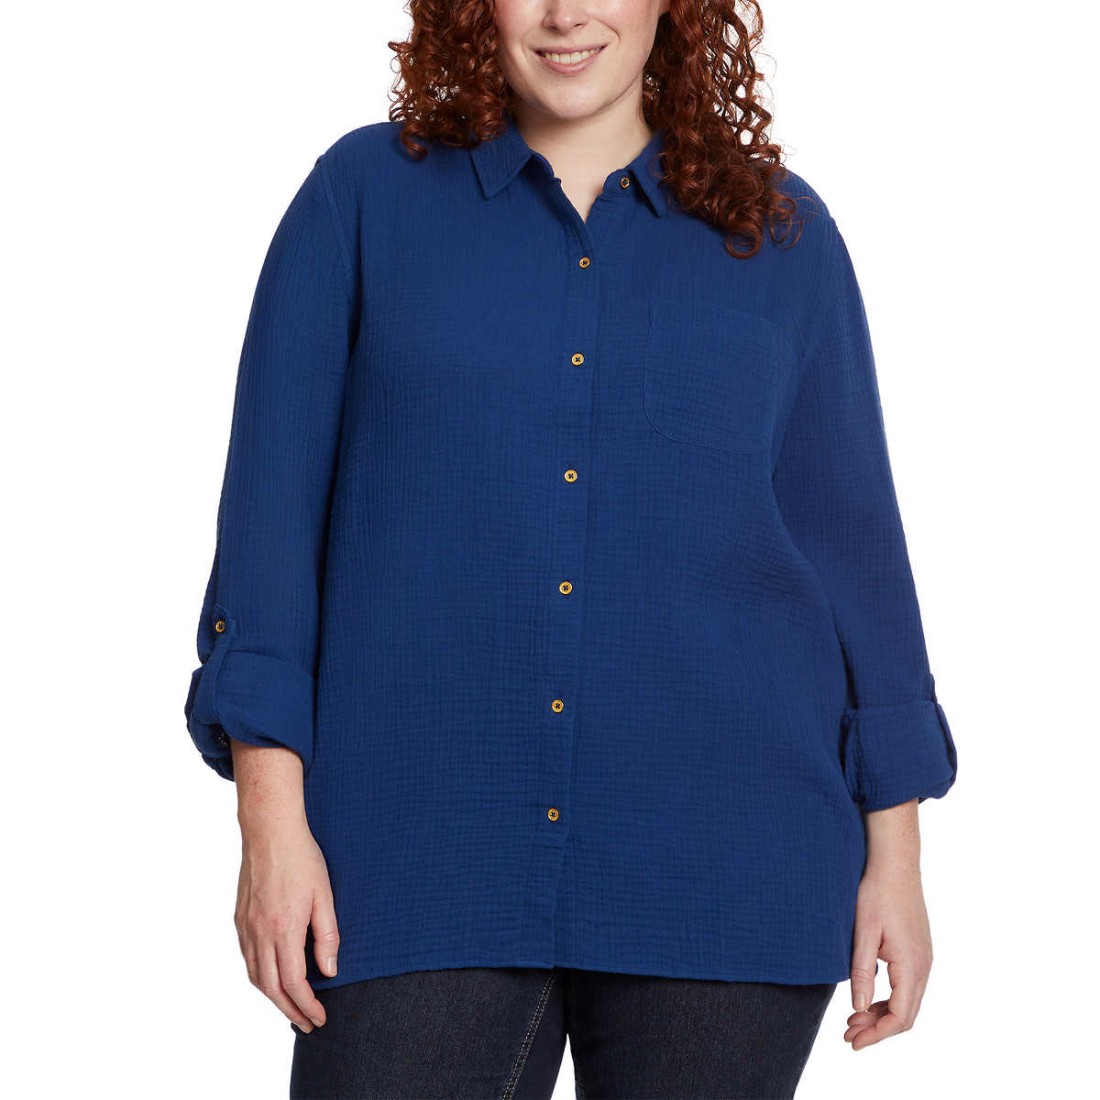 Anne Klein Ladies' Gauze Button Up Top, Blue, Small